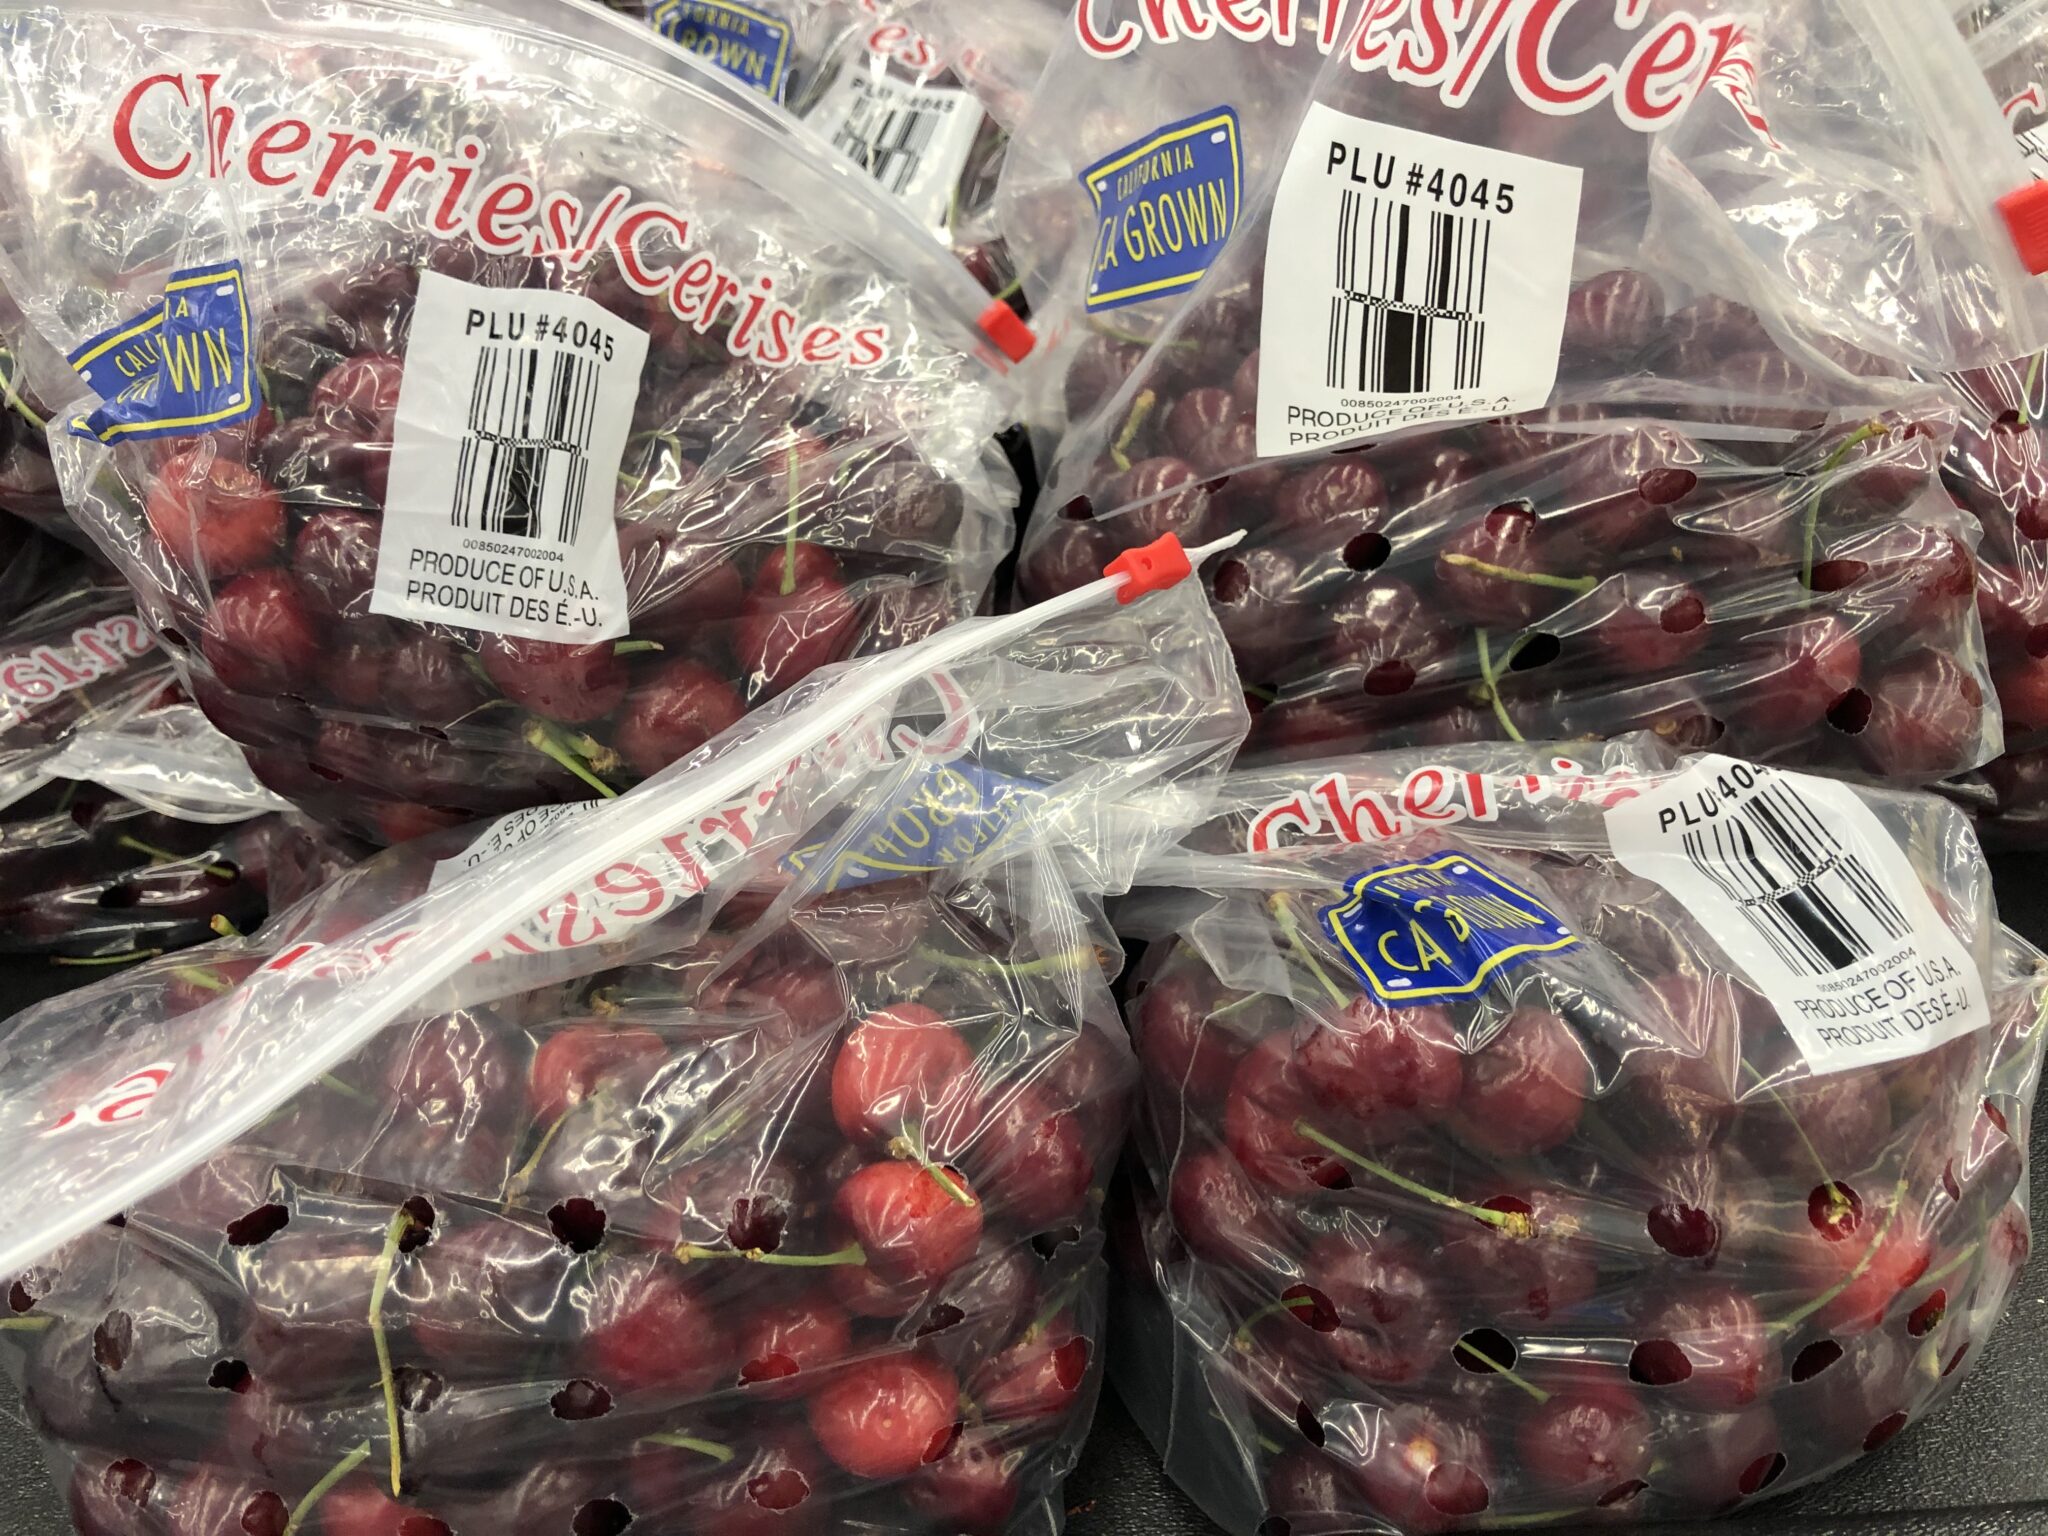 Giant: Fresh Sweet Cherries Just $1.97 Lb Starting 6/18